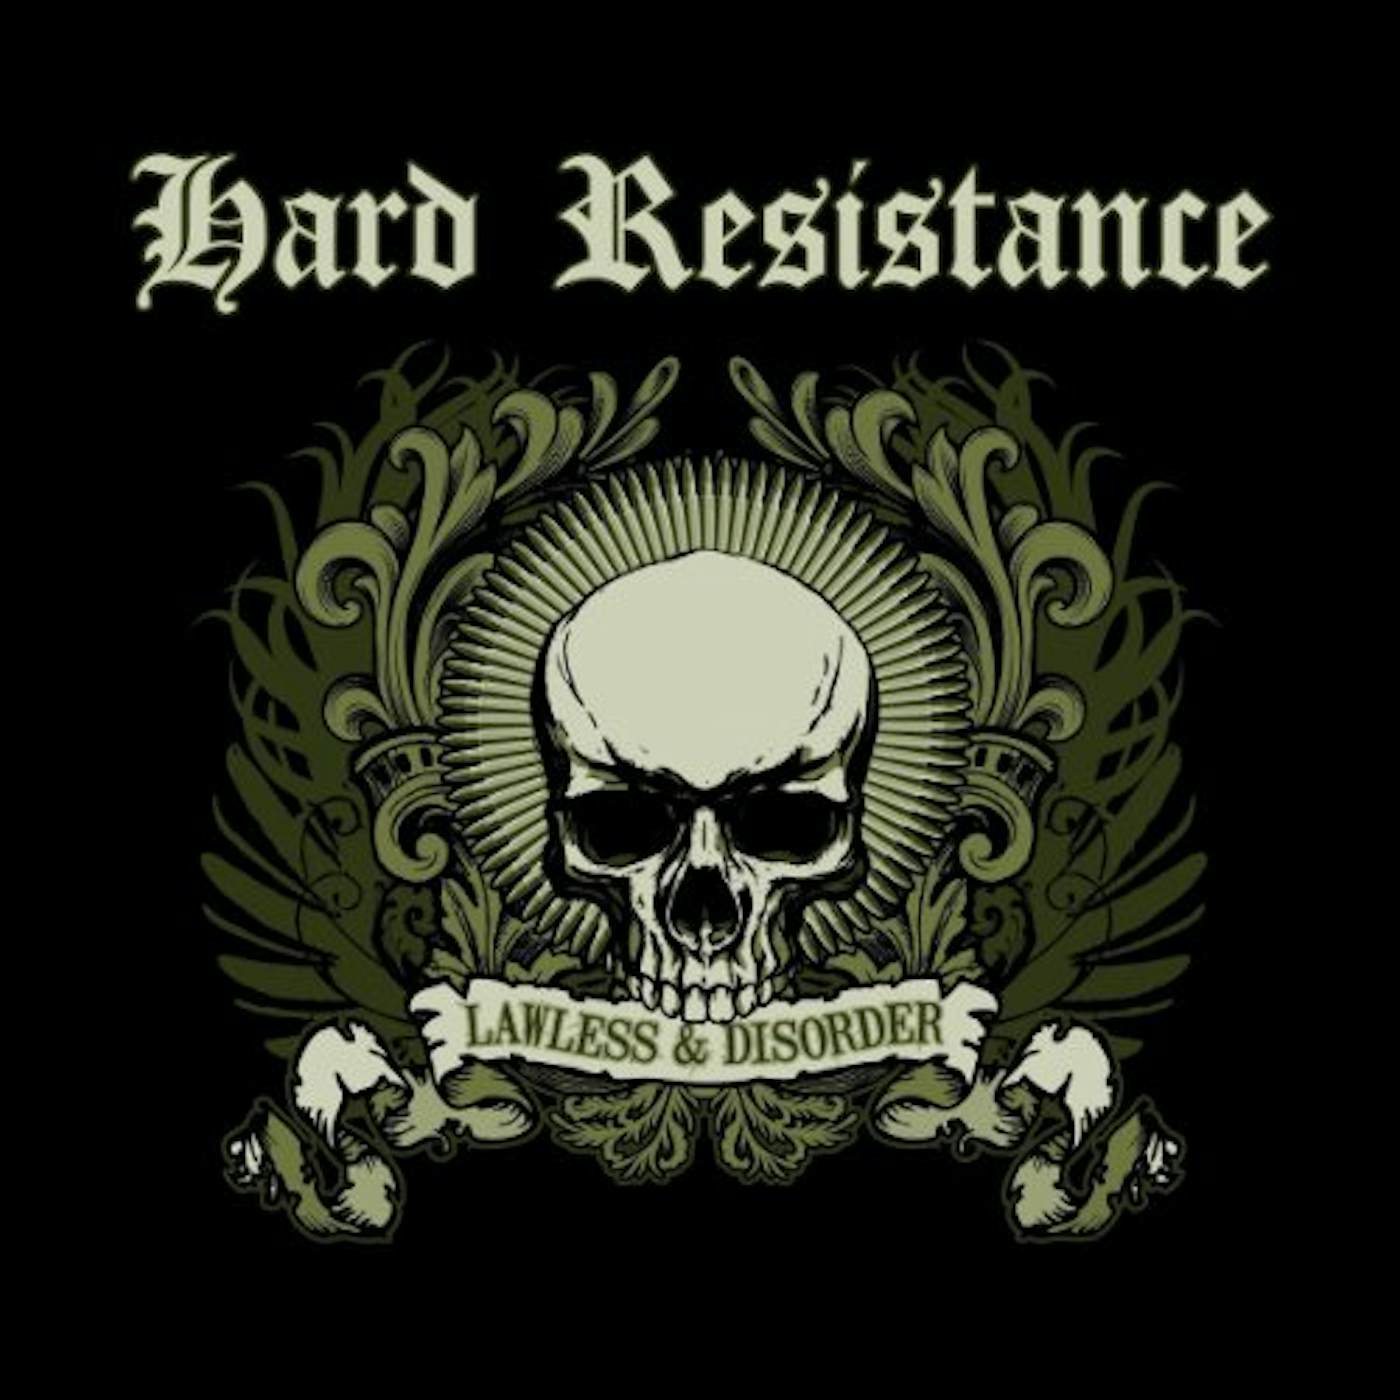 Hard Resistance Lawless & Disorder Vinyl Record